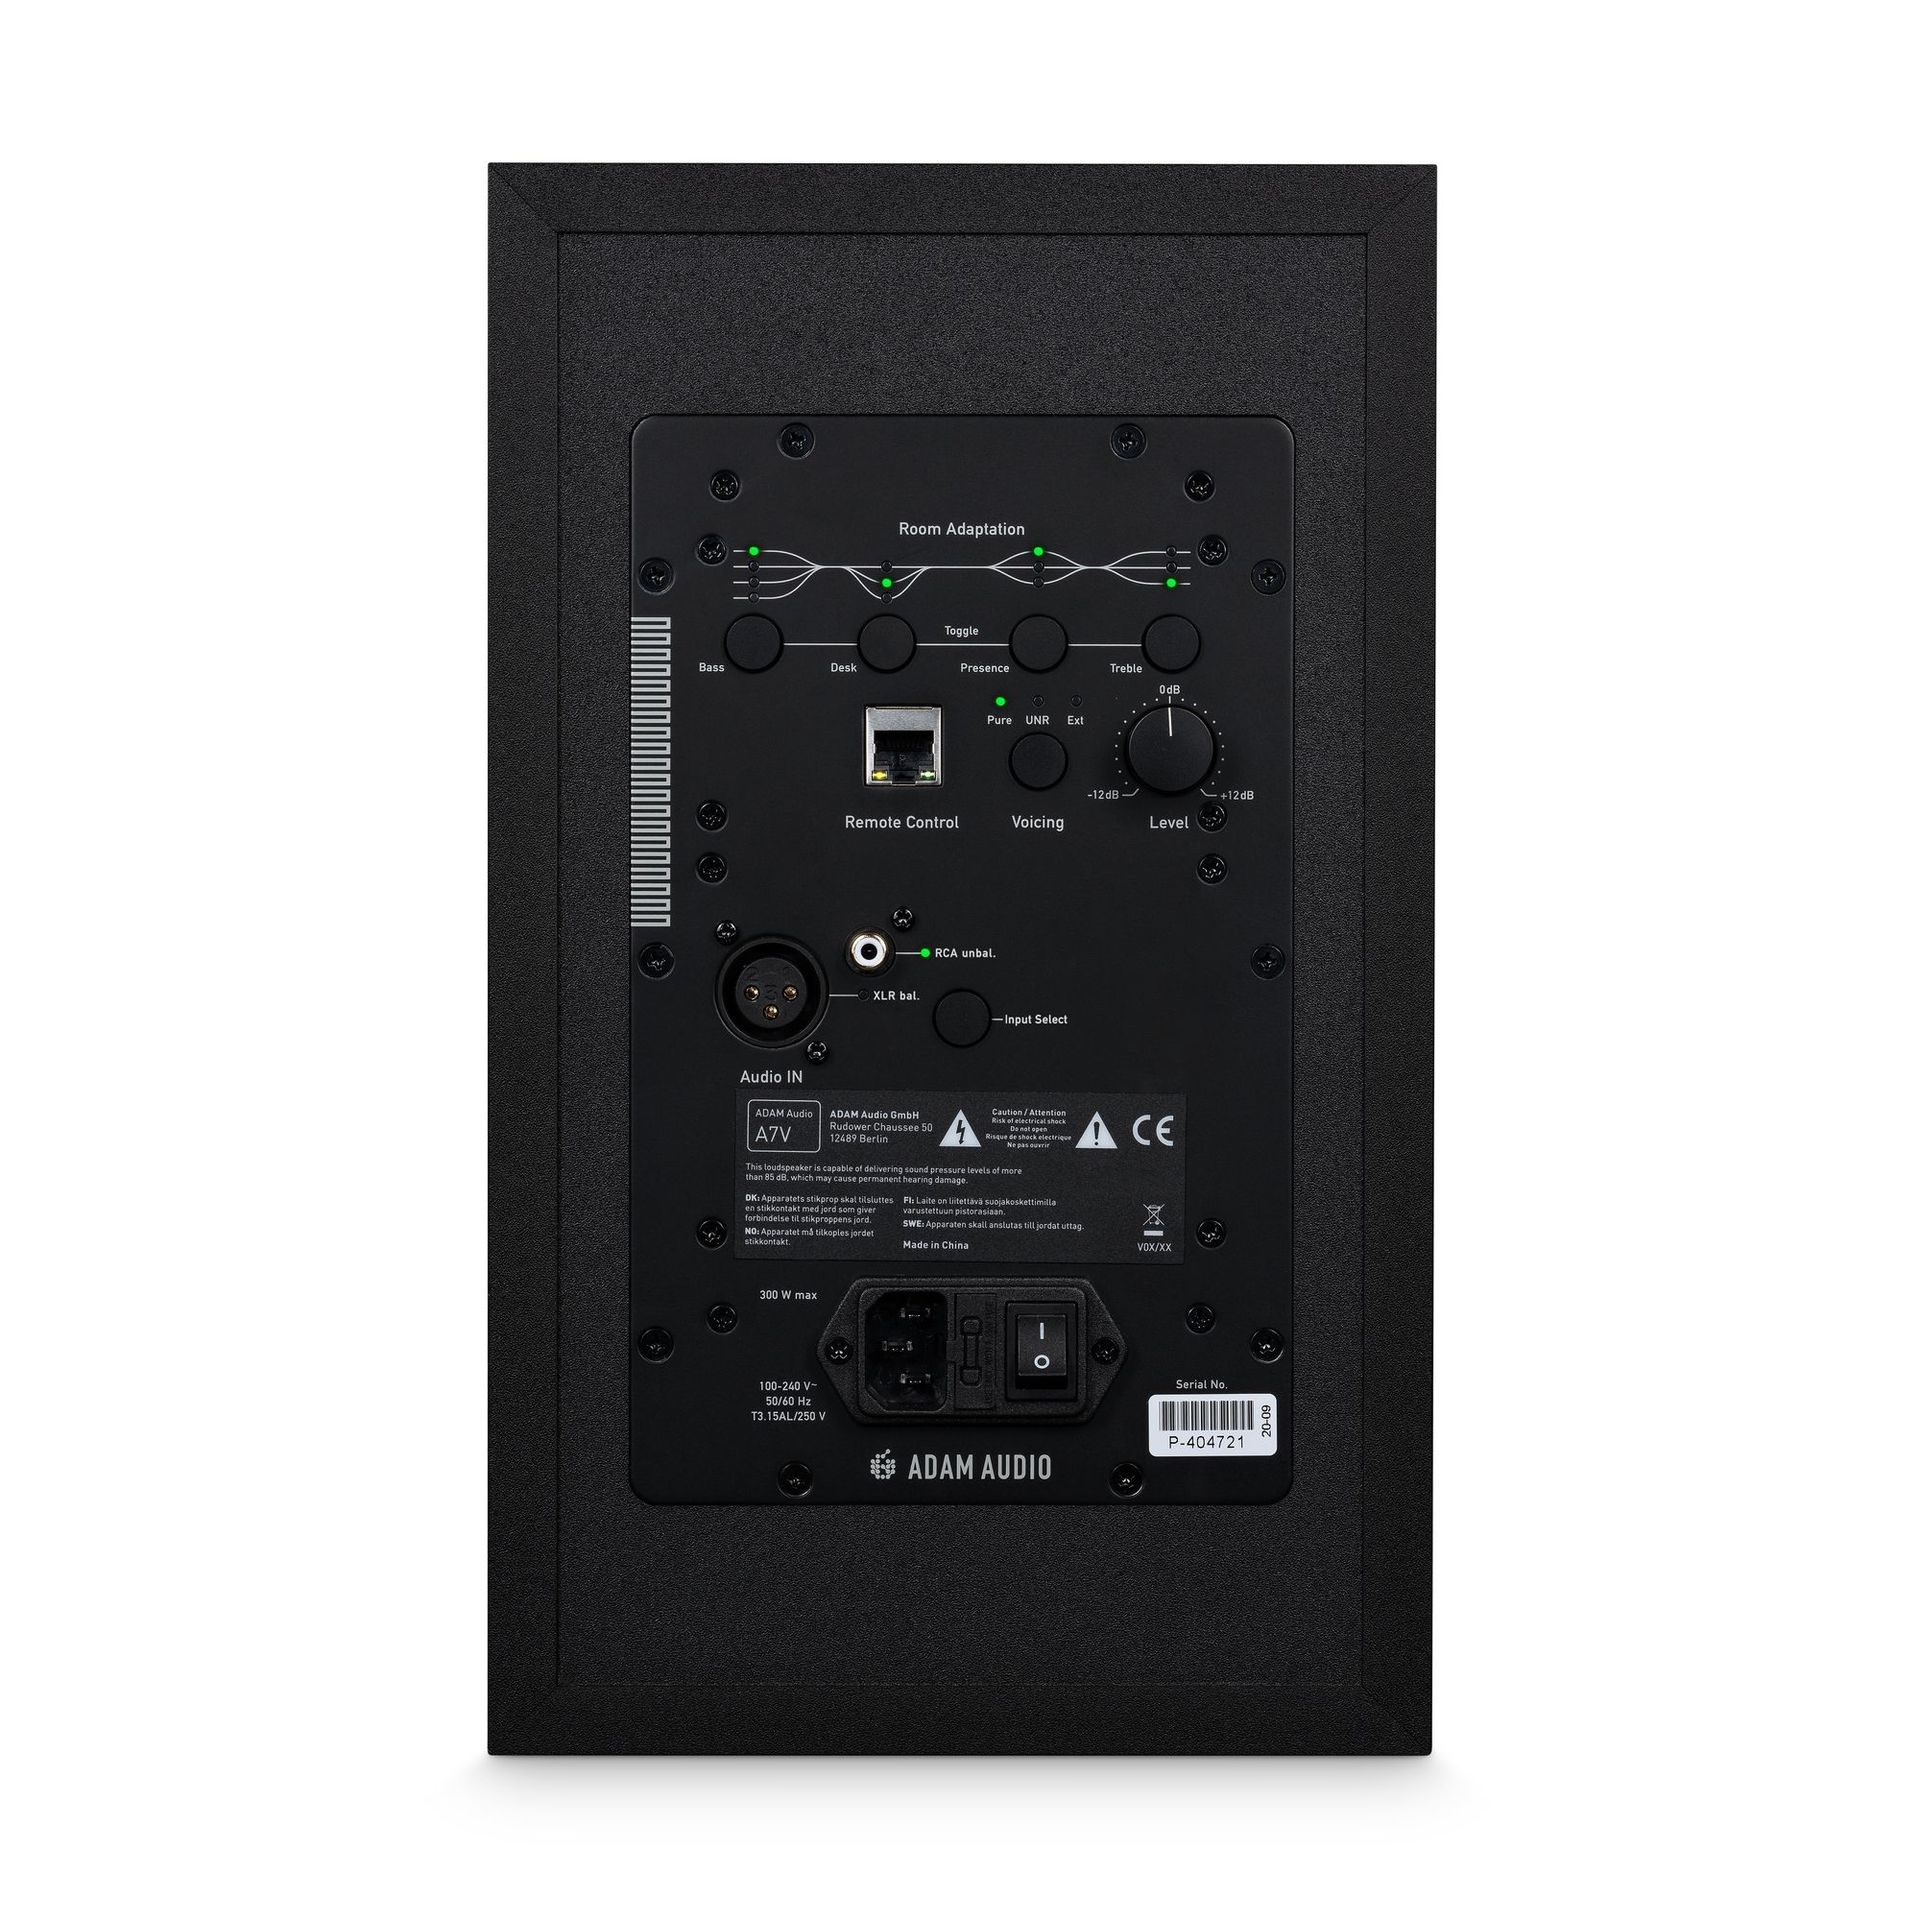 Adam A7V aktiver Studio Monitor 2-Wege Lautsprecherbox